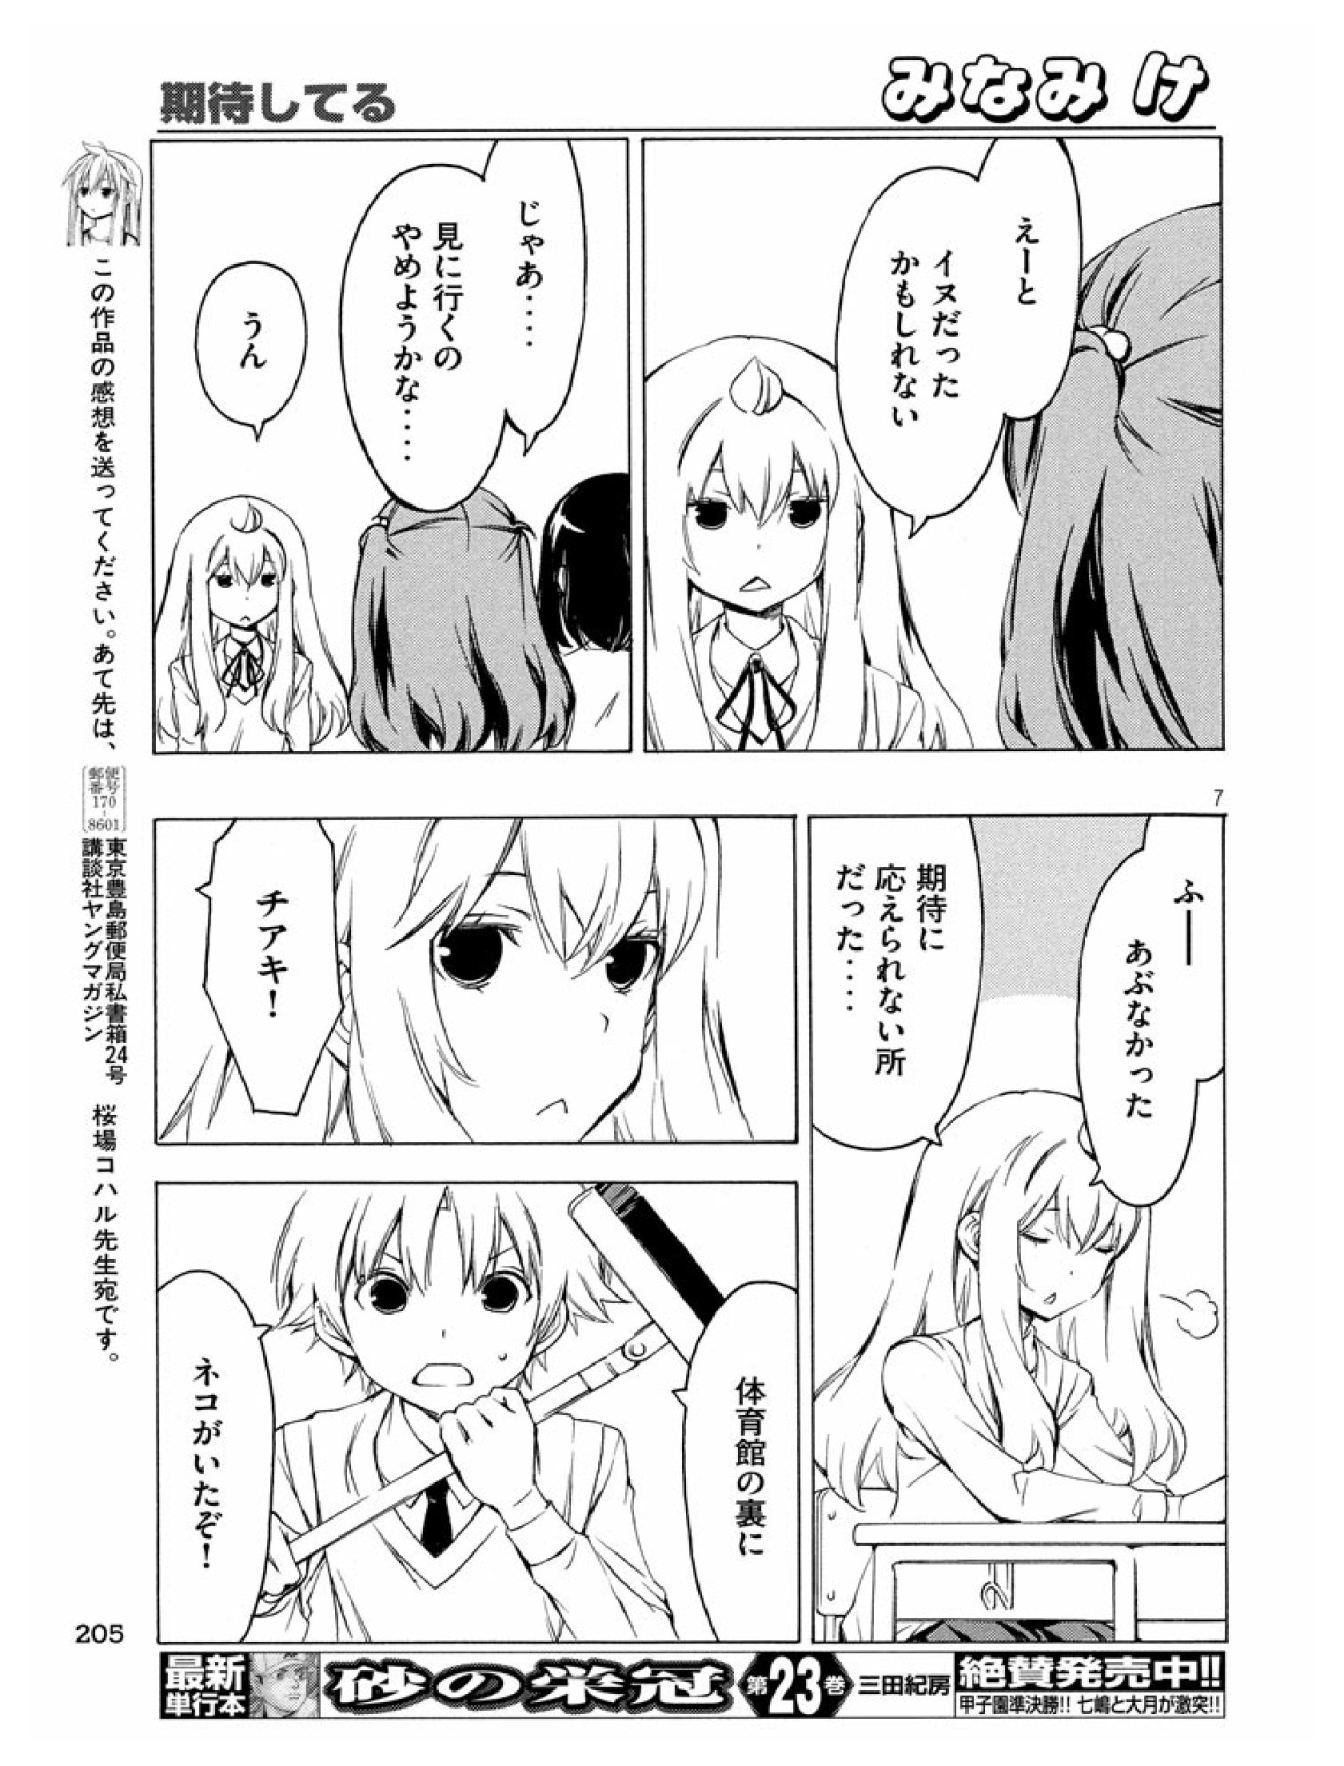 Minami-ke - Chapter 272 - Page 7